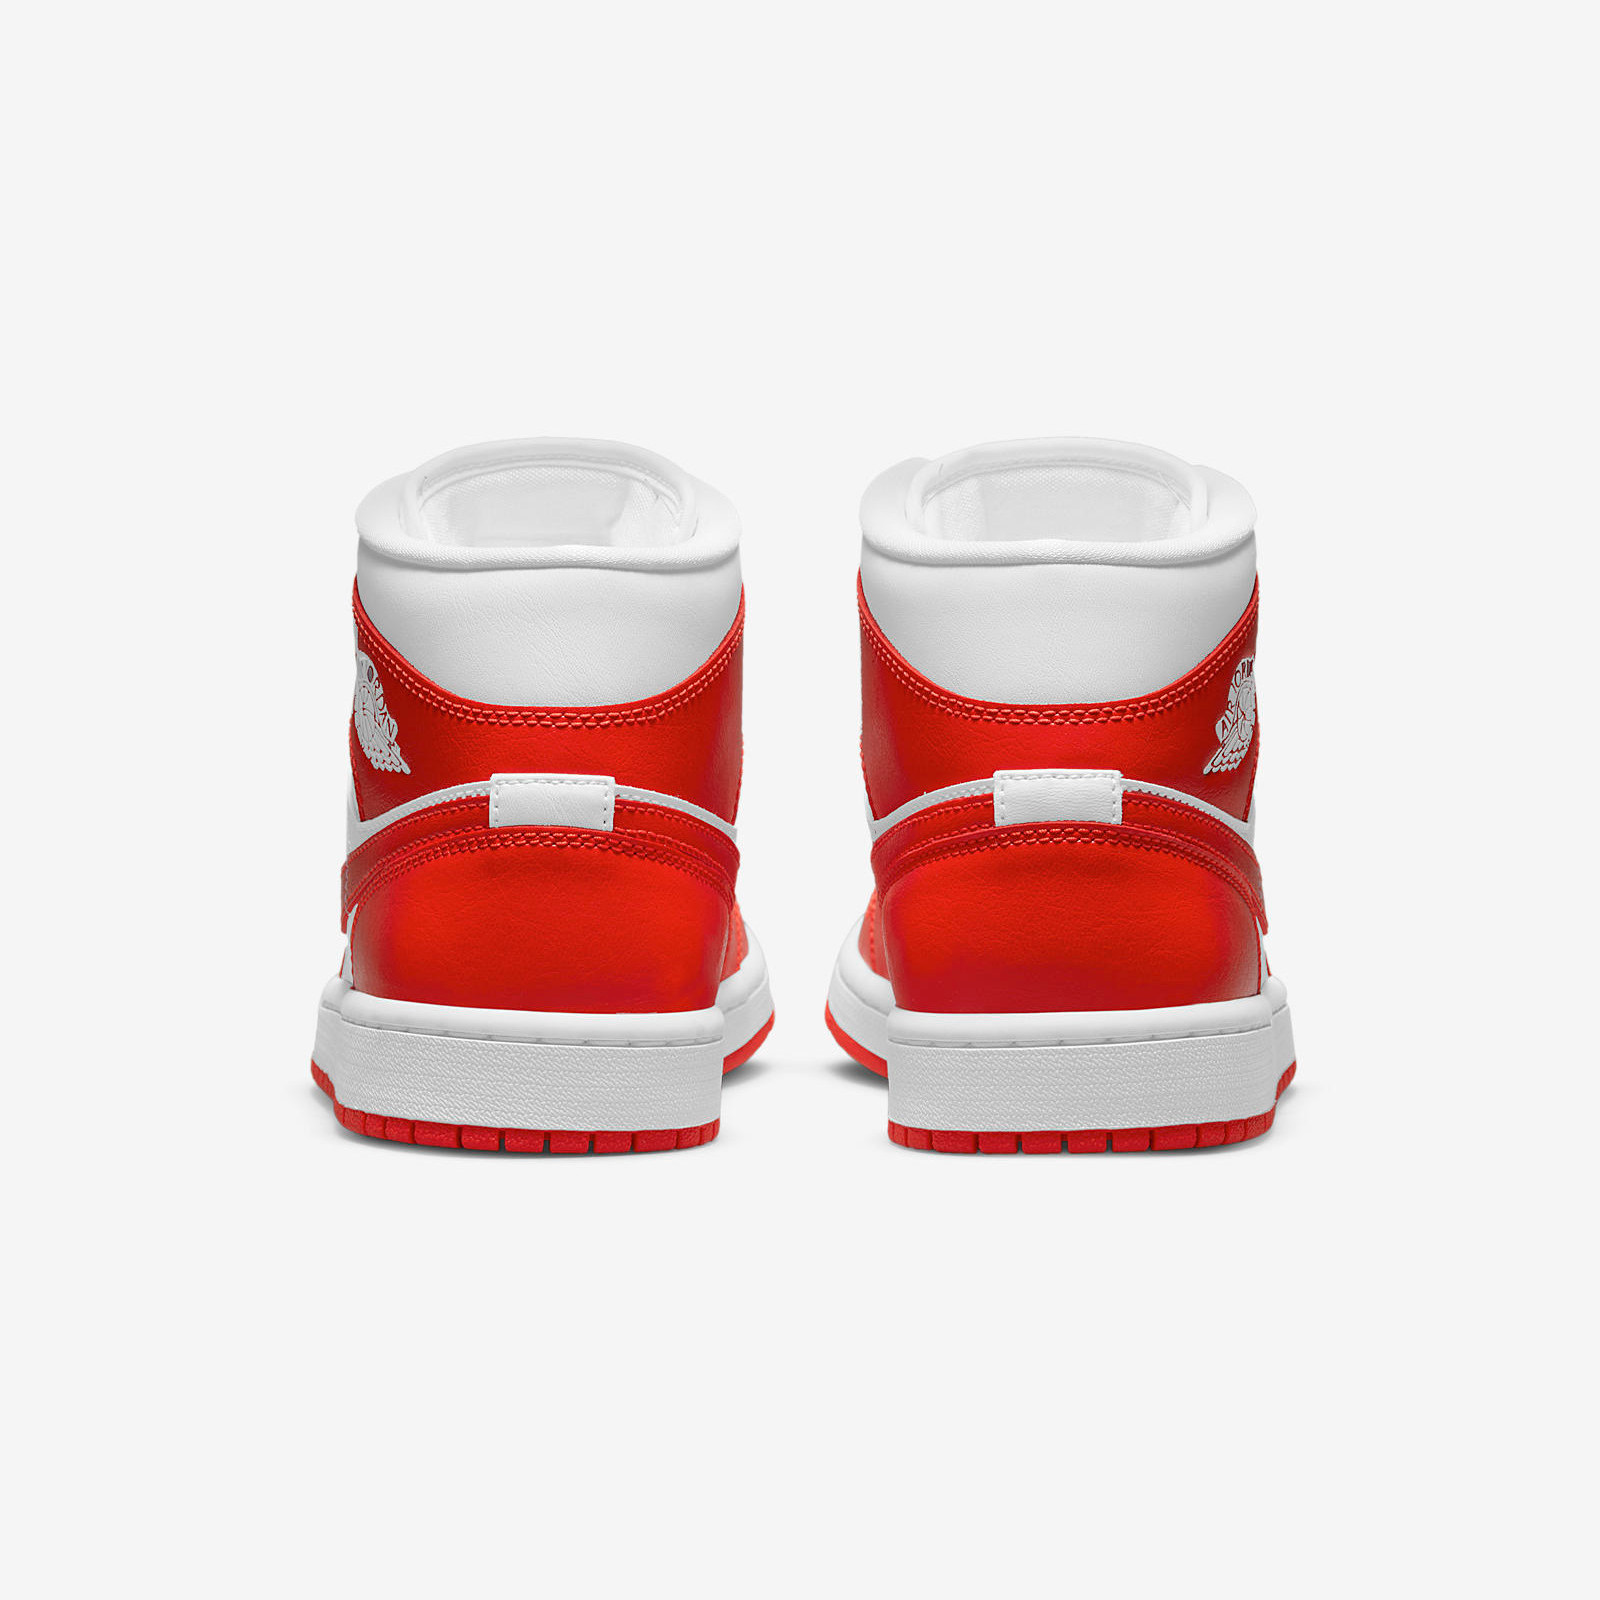 Air Jordan 1 Mid
White / Habanero Red